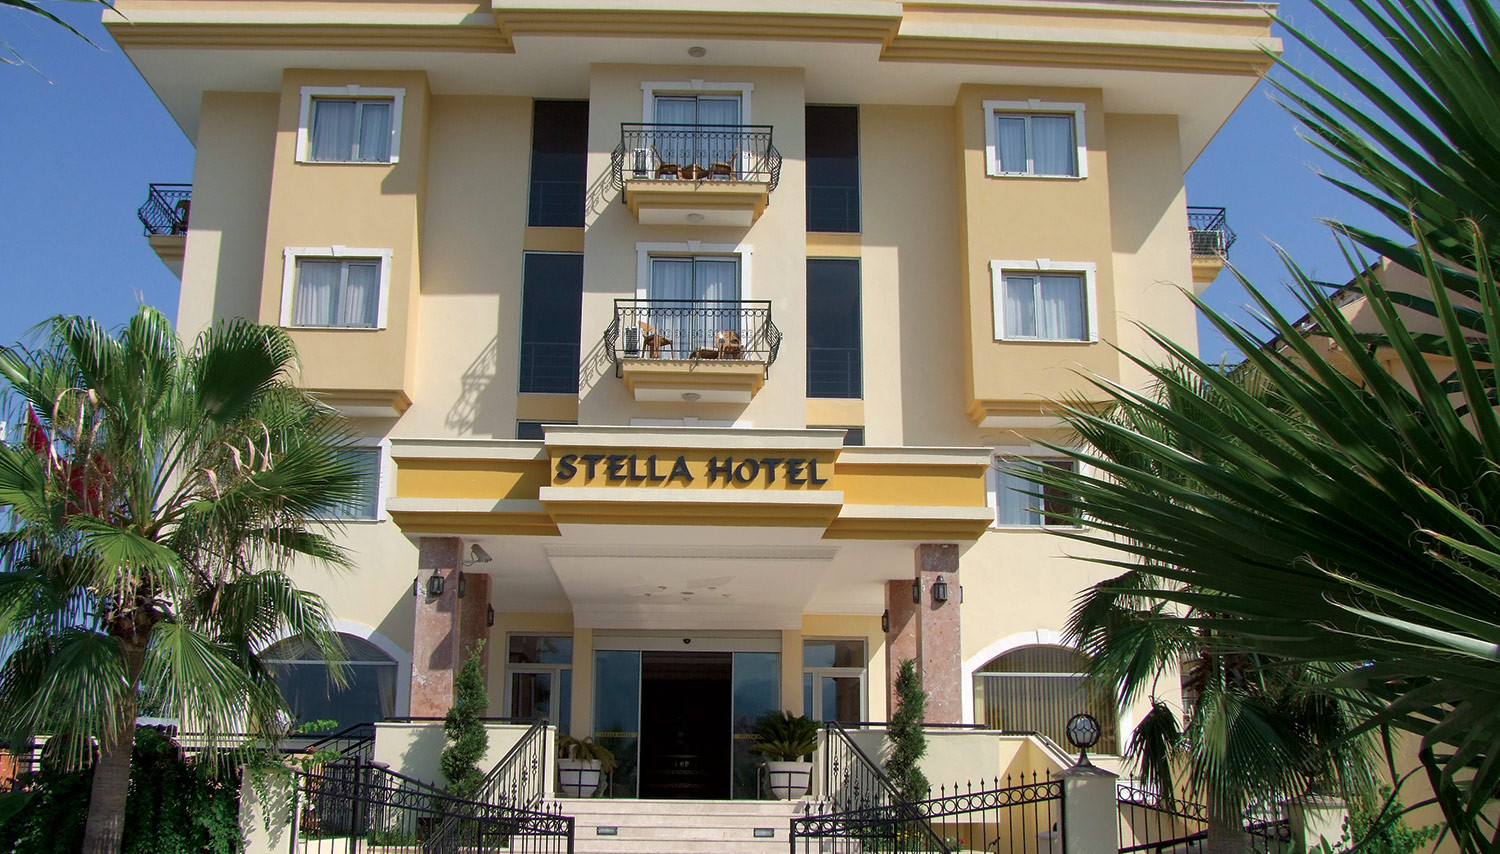 STELLA BEACH HOTEL